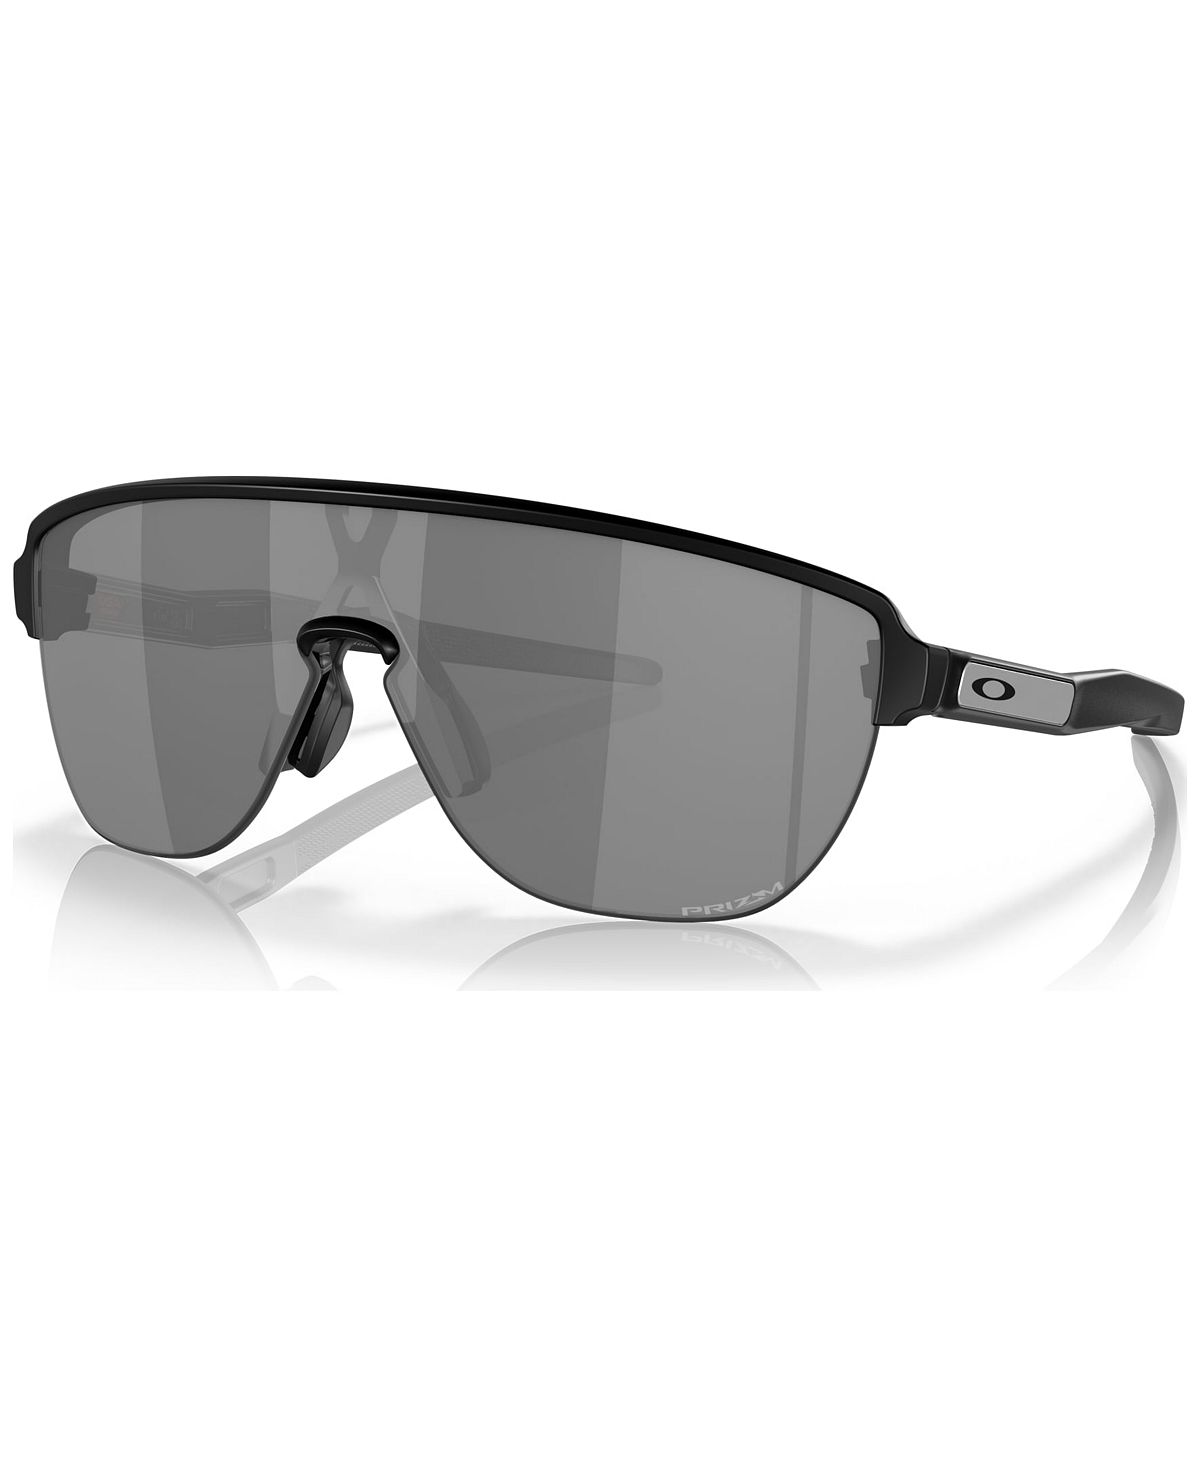 Мужские солнцезащитные очки для коридора, OO9248 Oakley t6148 matte black 220 мл c13t614800